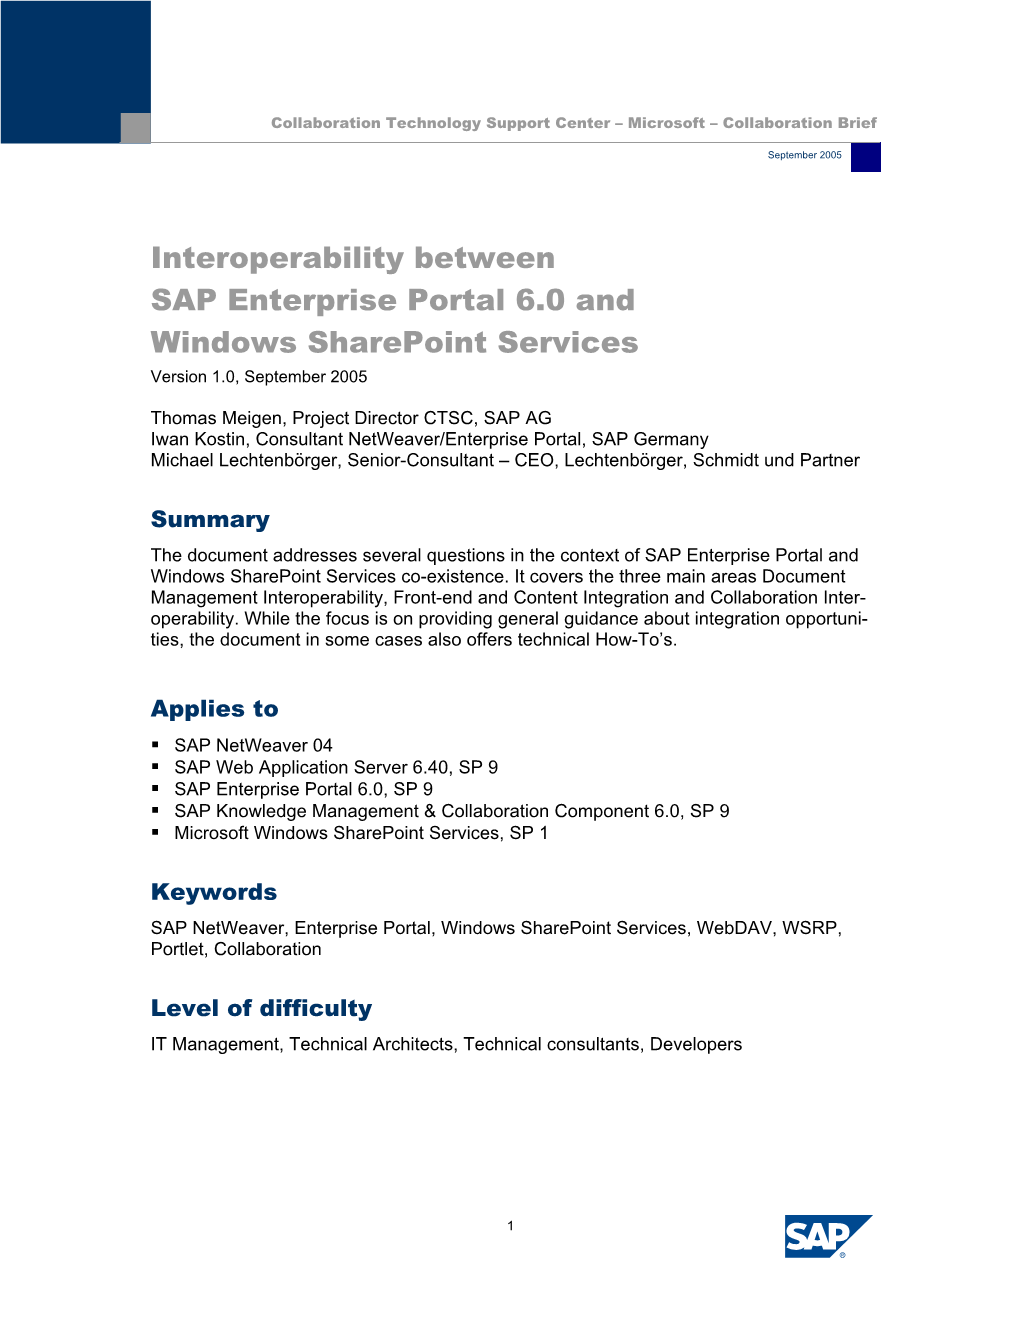 Interoperability Between SAP Enterprise Portal 6.0 and Windows Sharepoint Services Version 1.0, September 2005